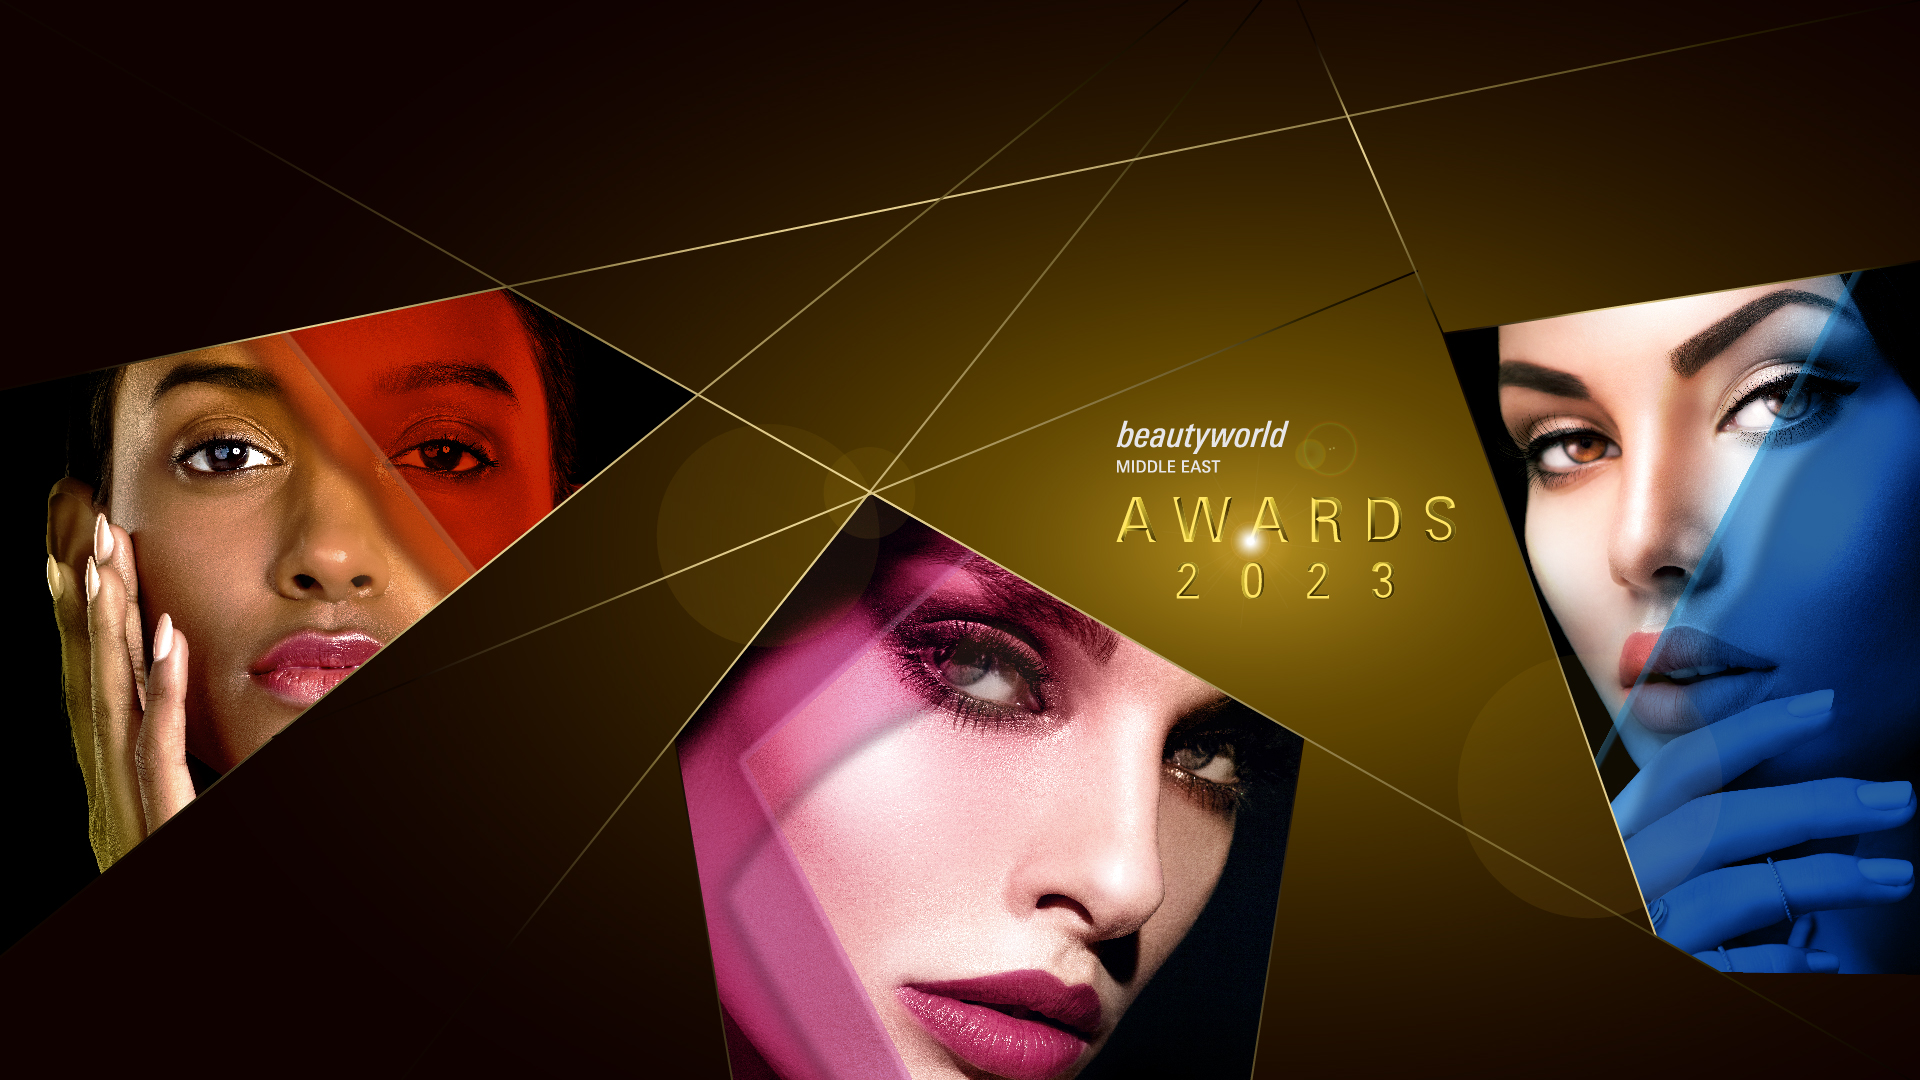 Beautyworld Middle East Awards 2023